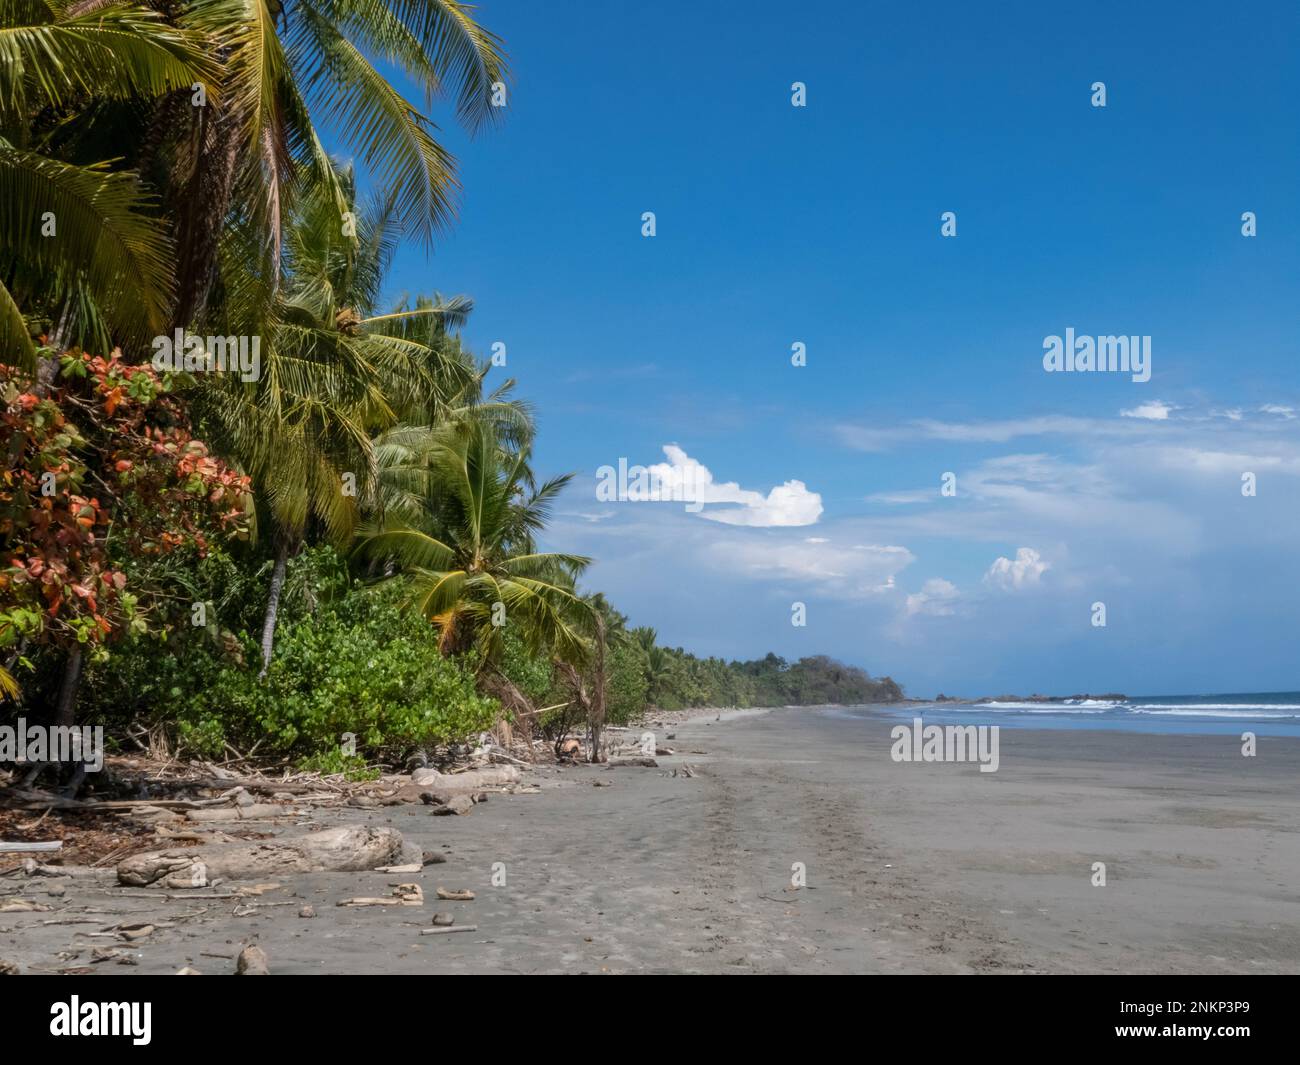 A view of the long empty beach of Playa Grande near Montezuma in Costa Rica Stock Photo